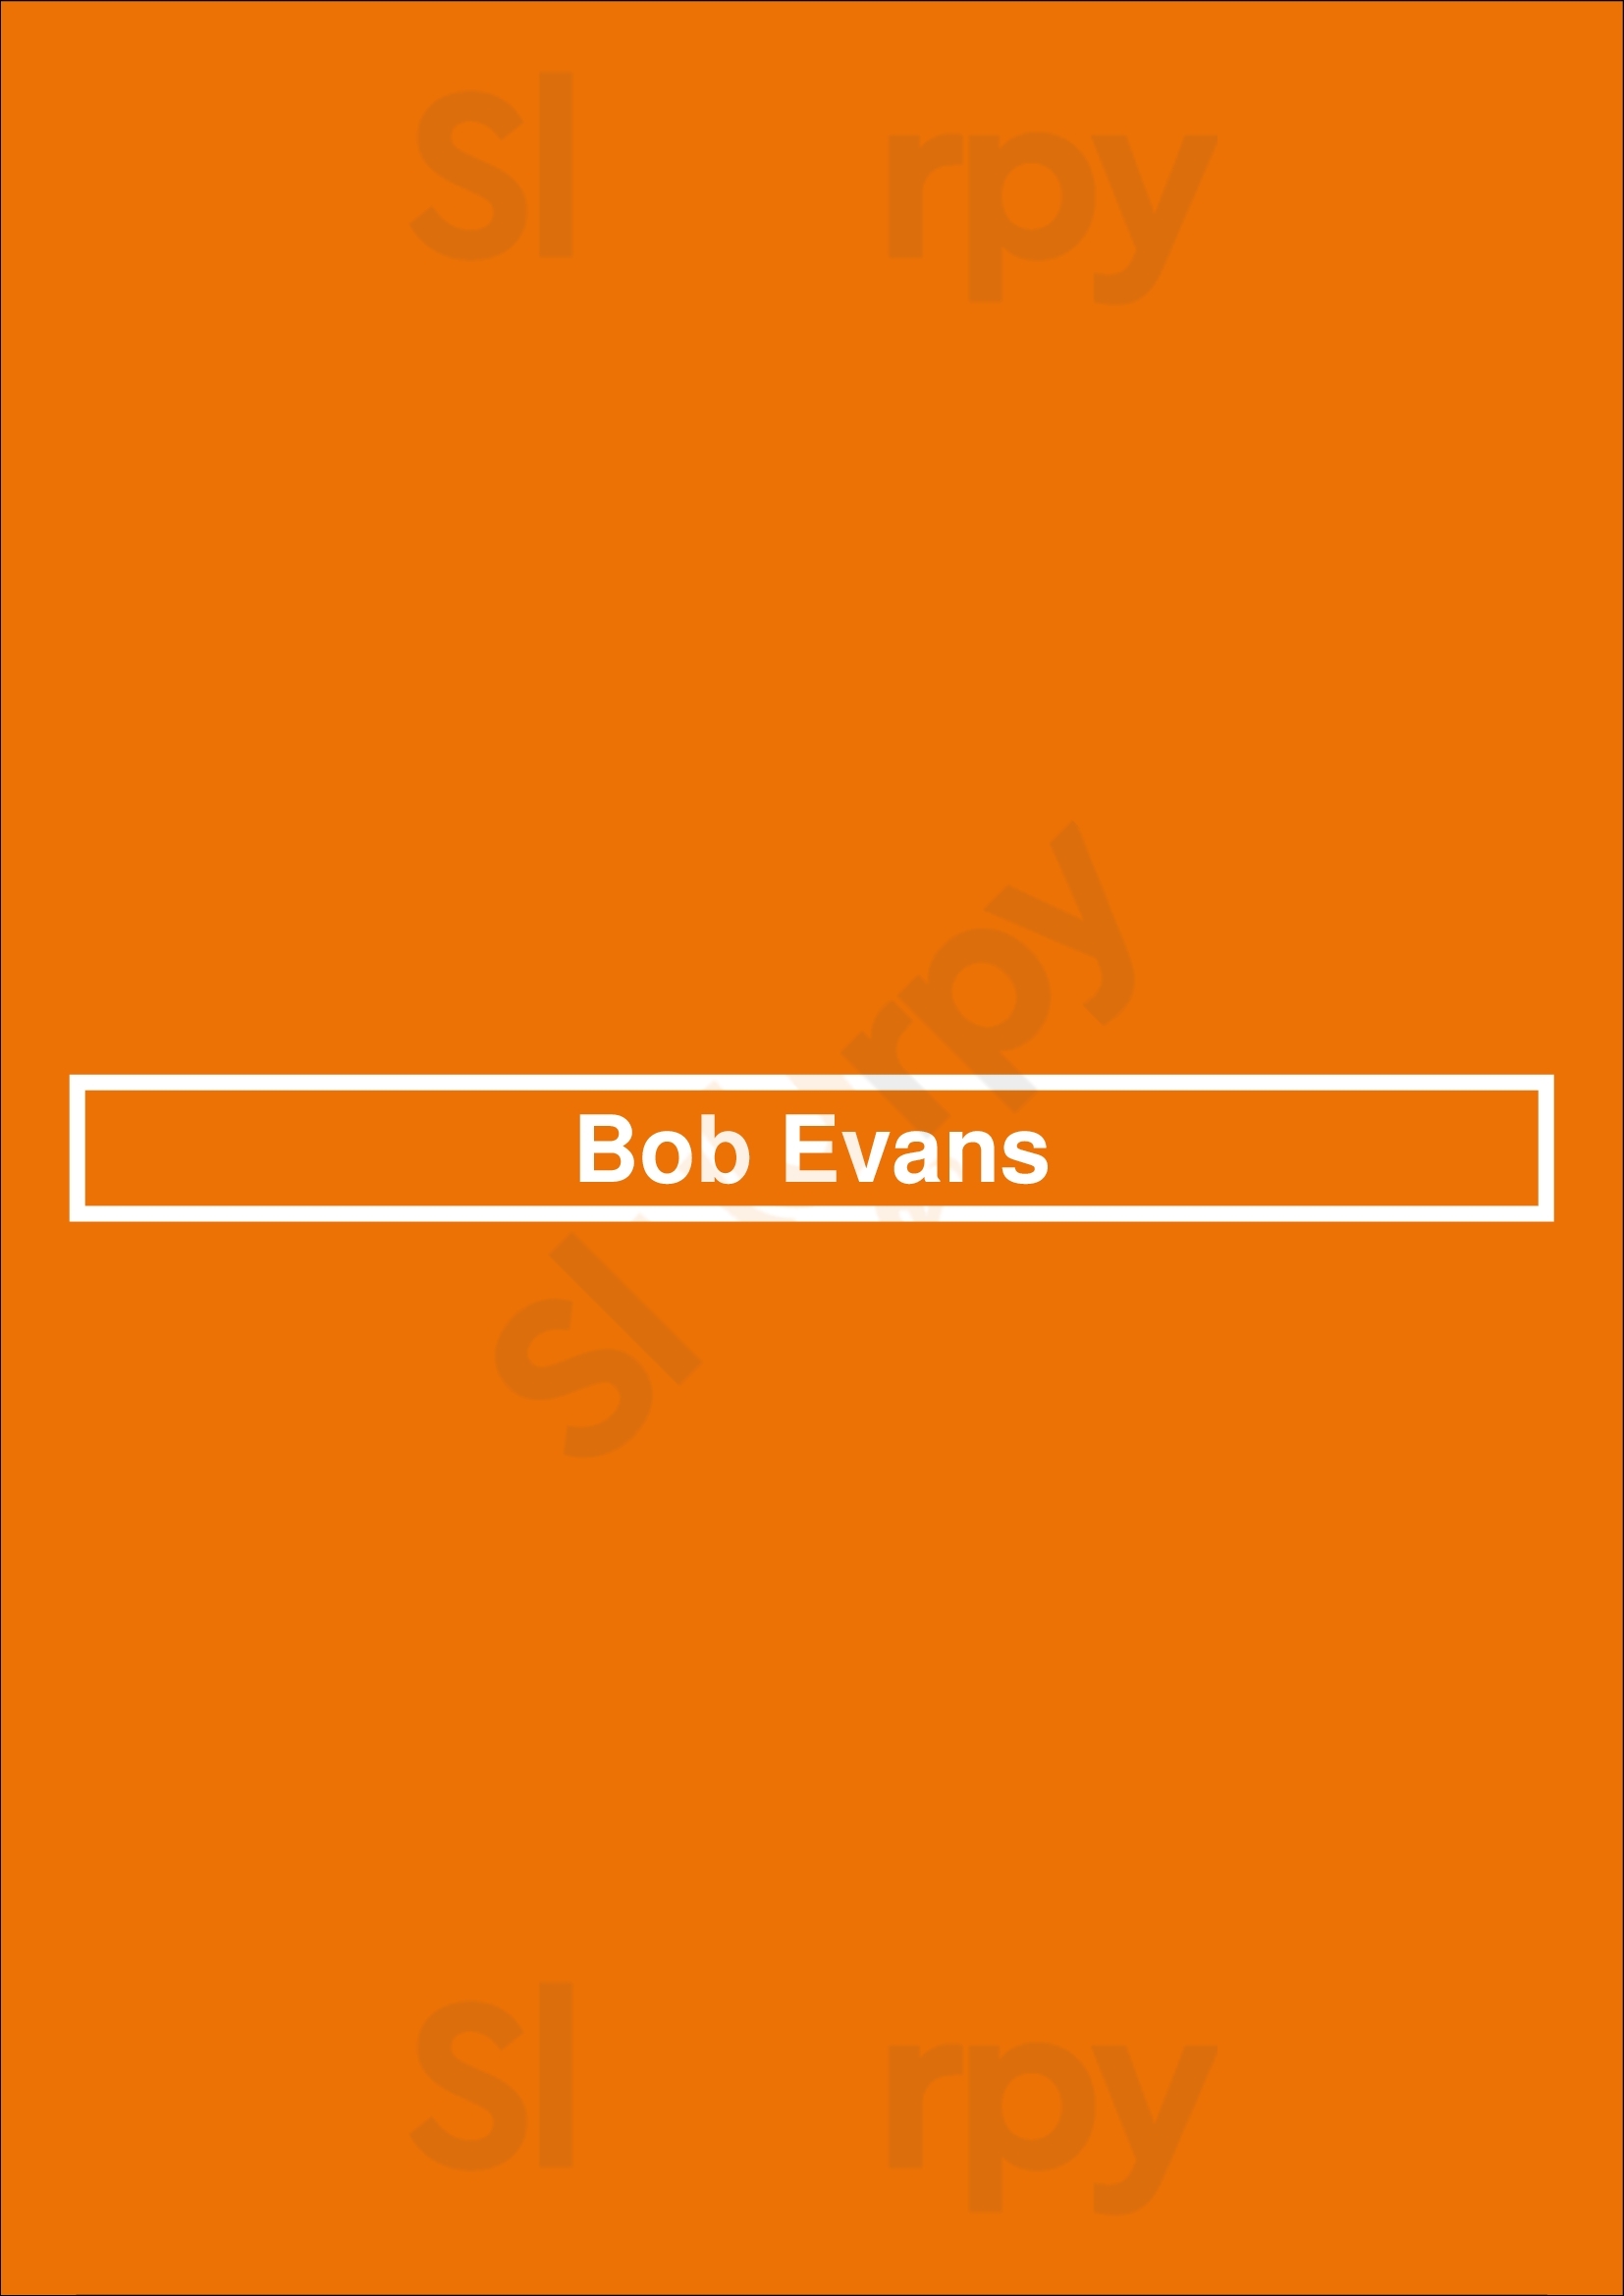 Bob Evans Kansas City Menu - 1